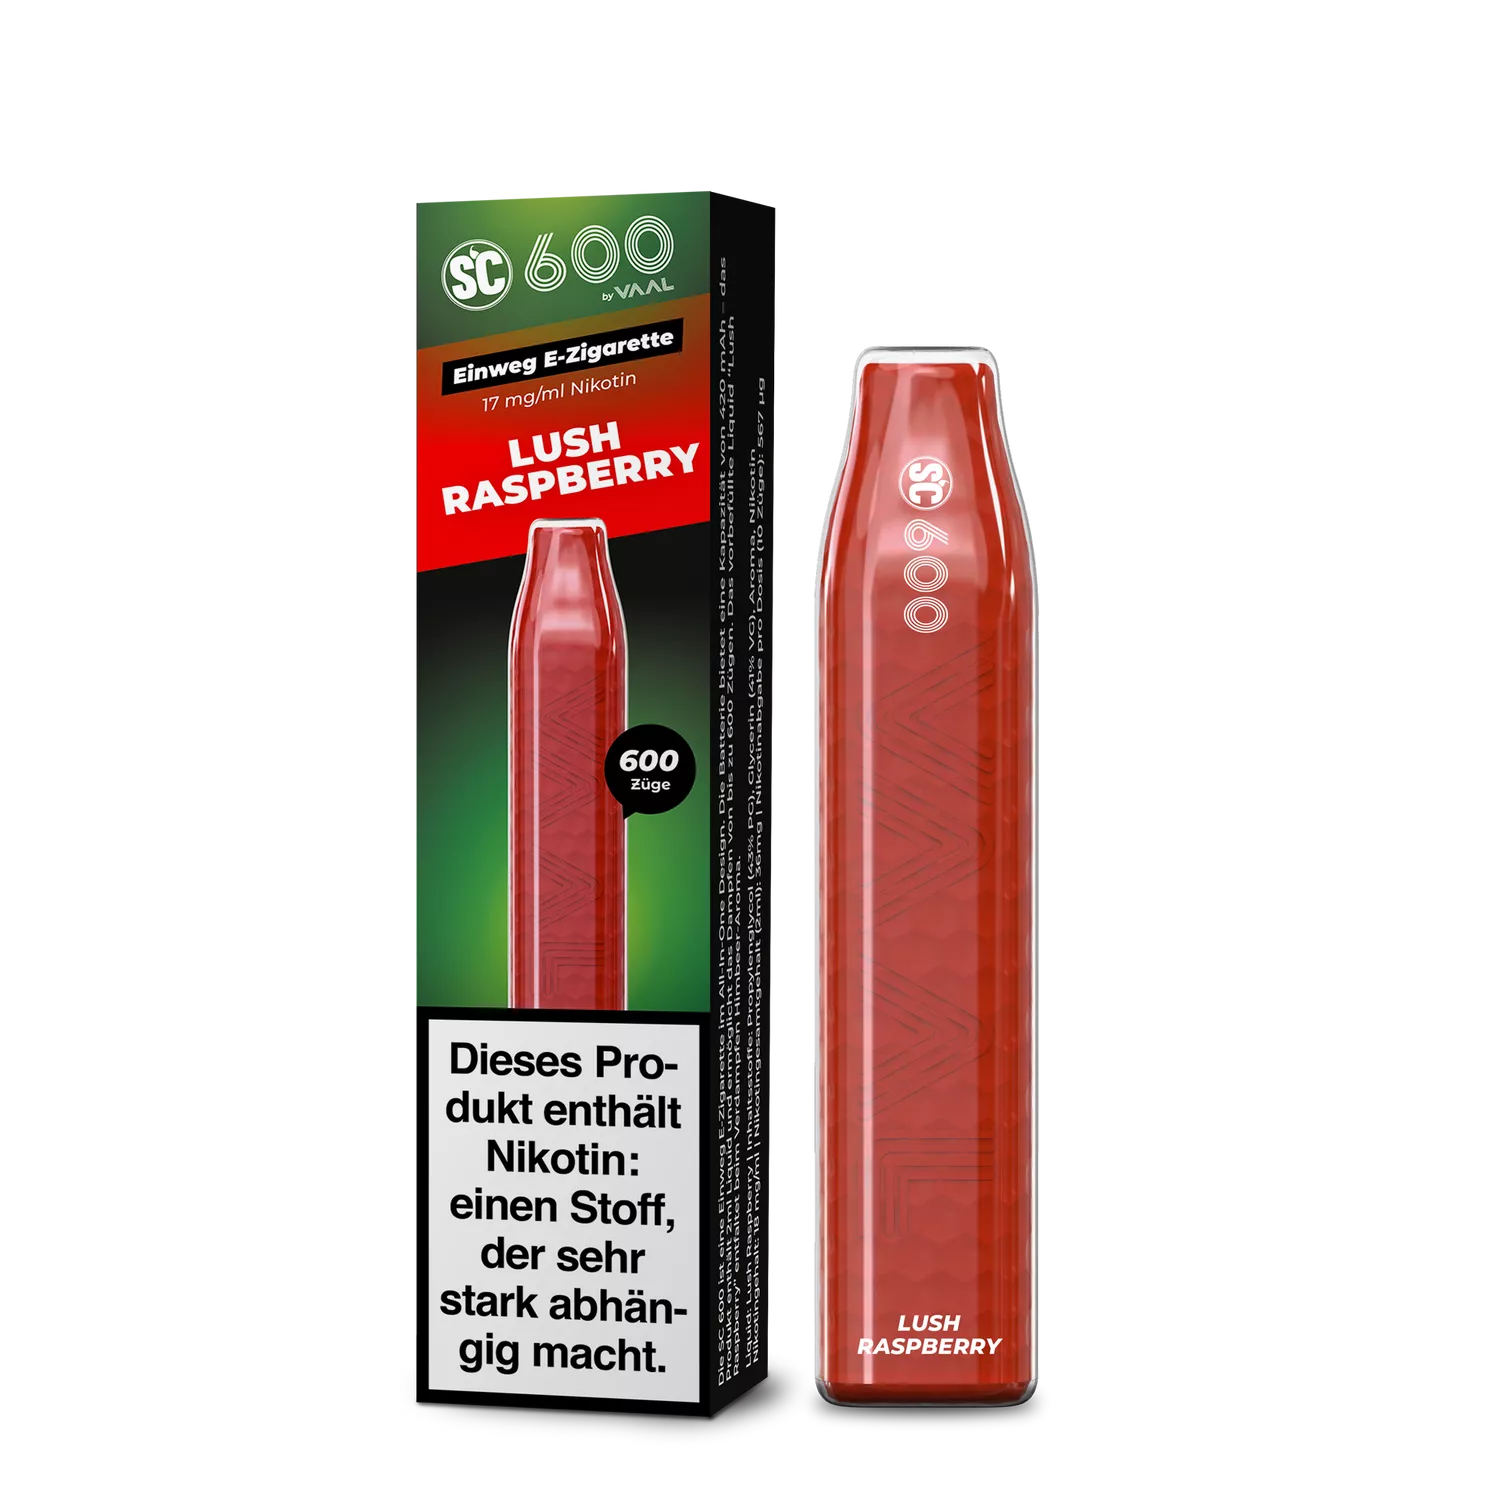 SC 600 Lush Raspberry Einweg E-Zigarette bis 600 Züge by VAAL 17mg/ml